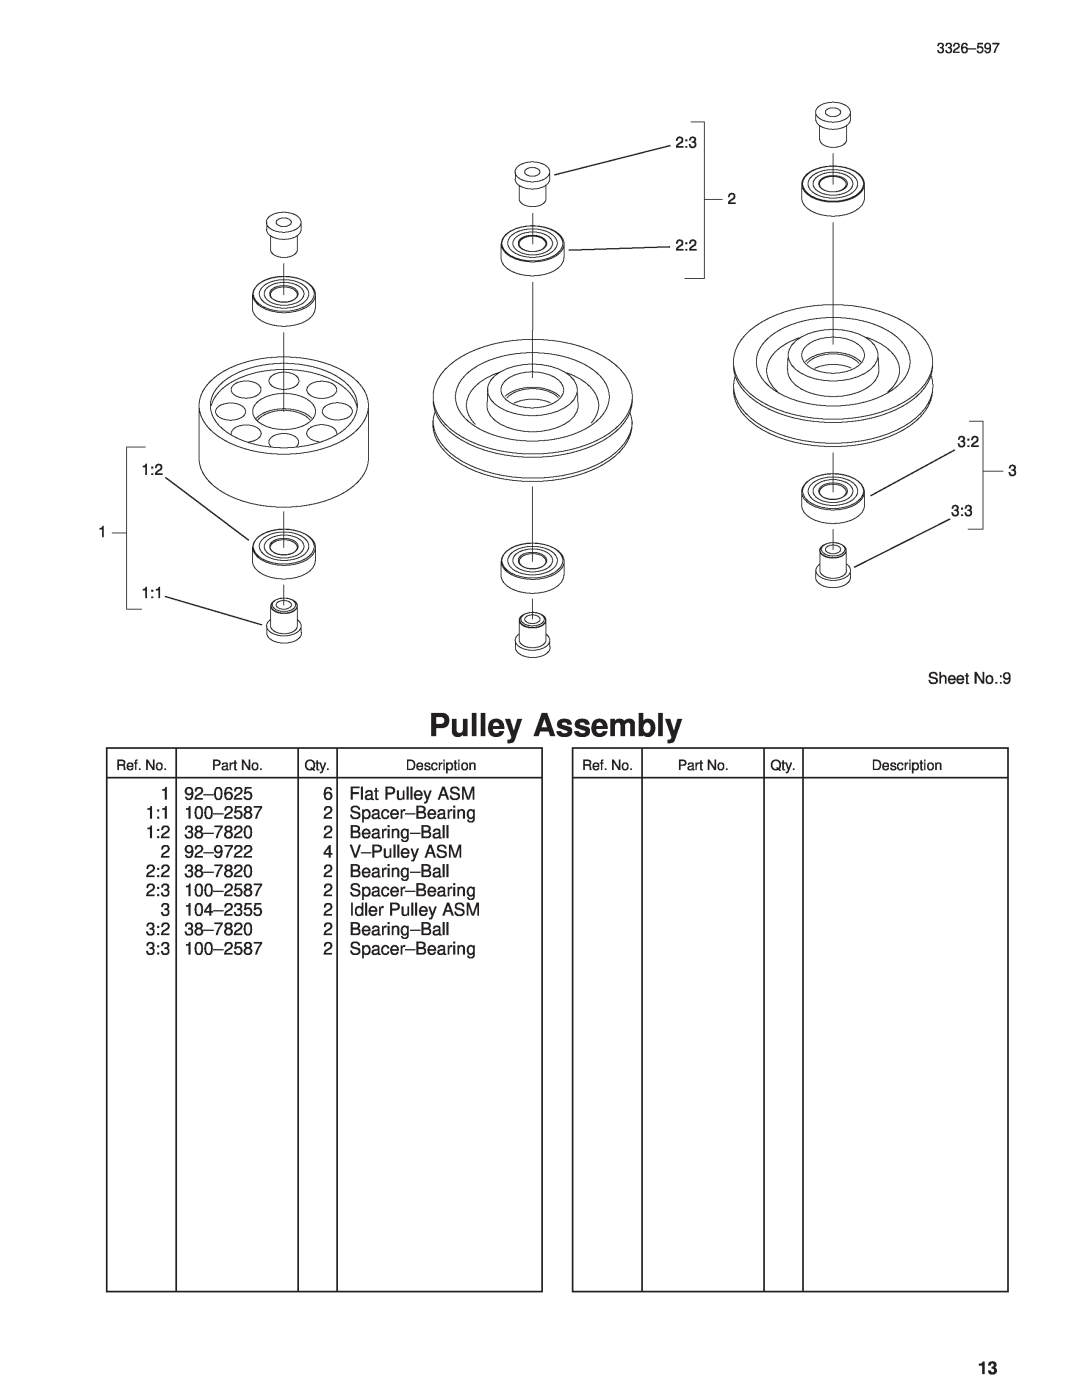 Toro 30402210000001 and Up manual Pulley Assembly, Sheet No.9 